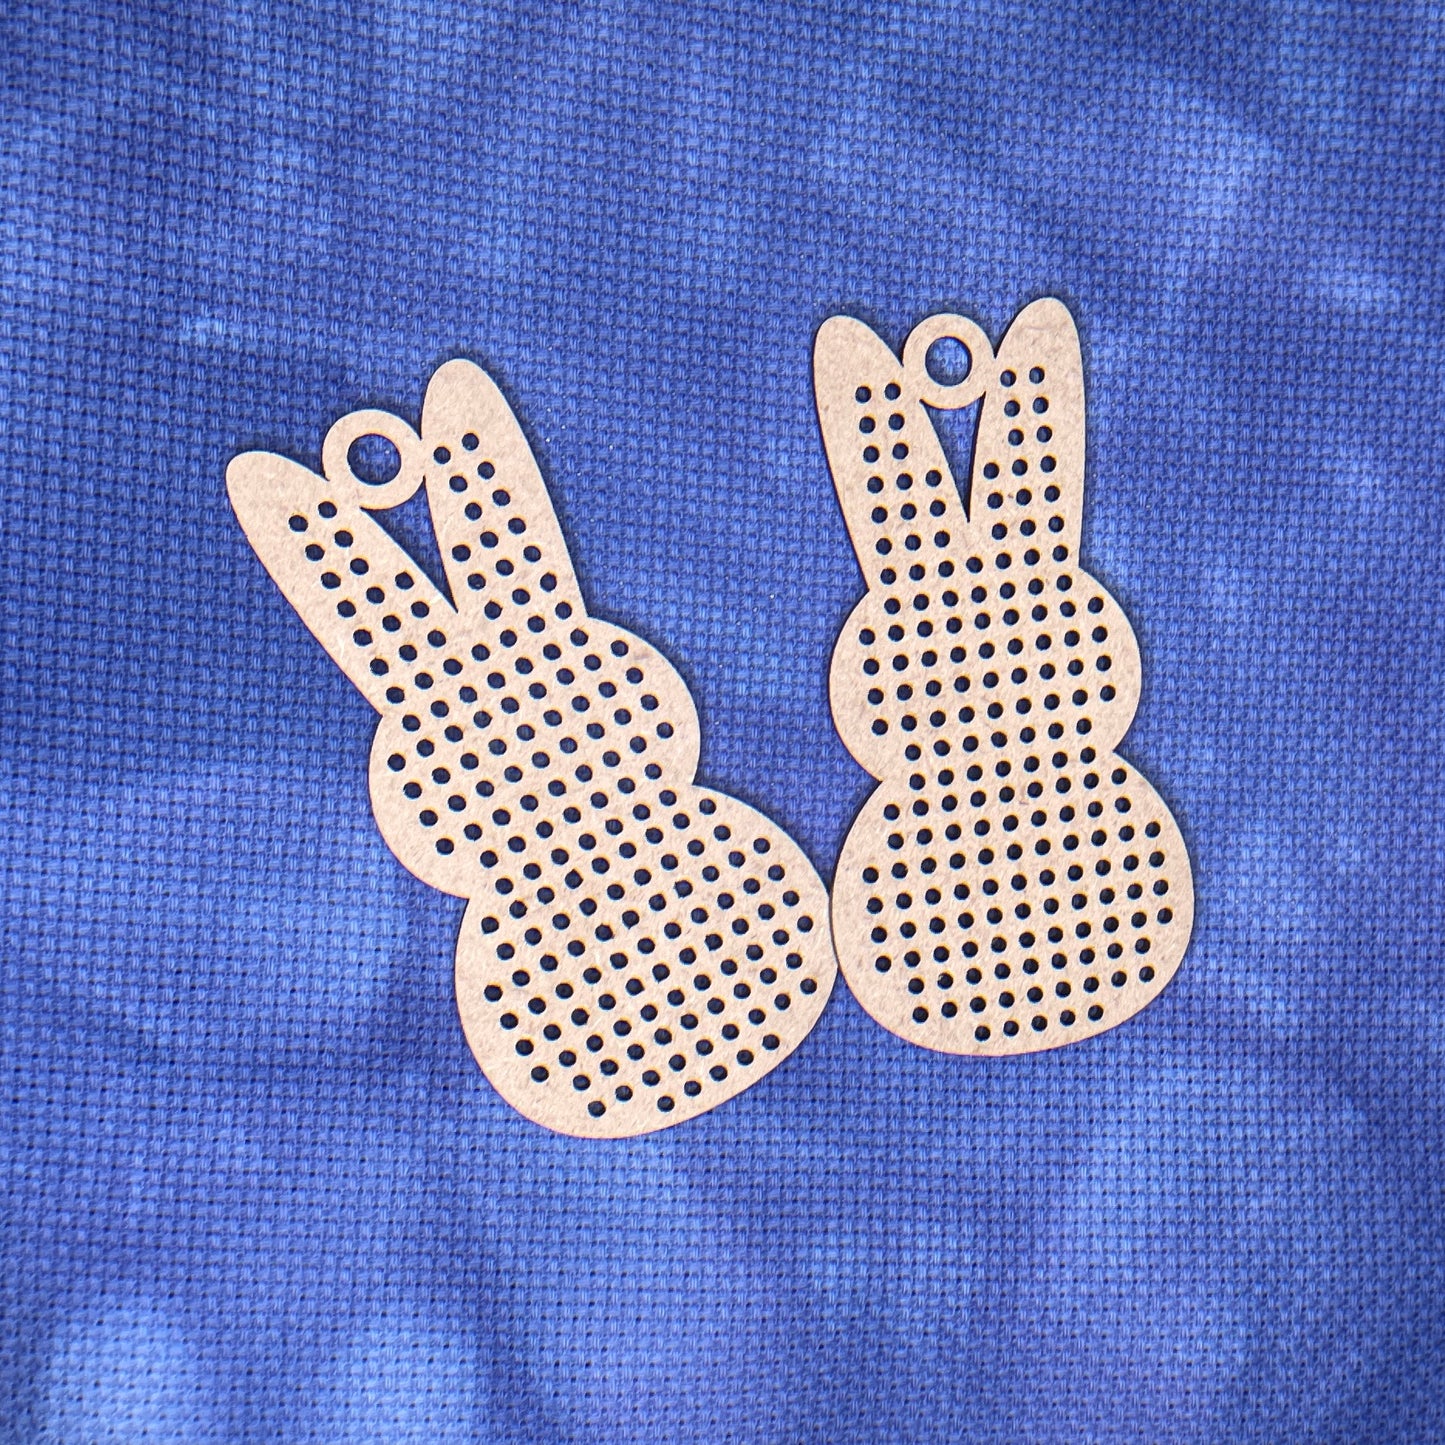 Wood Cross Stitch Ornament - Marshmallow Bunny